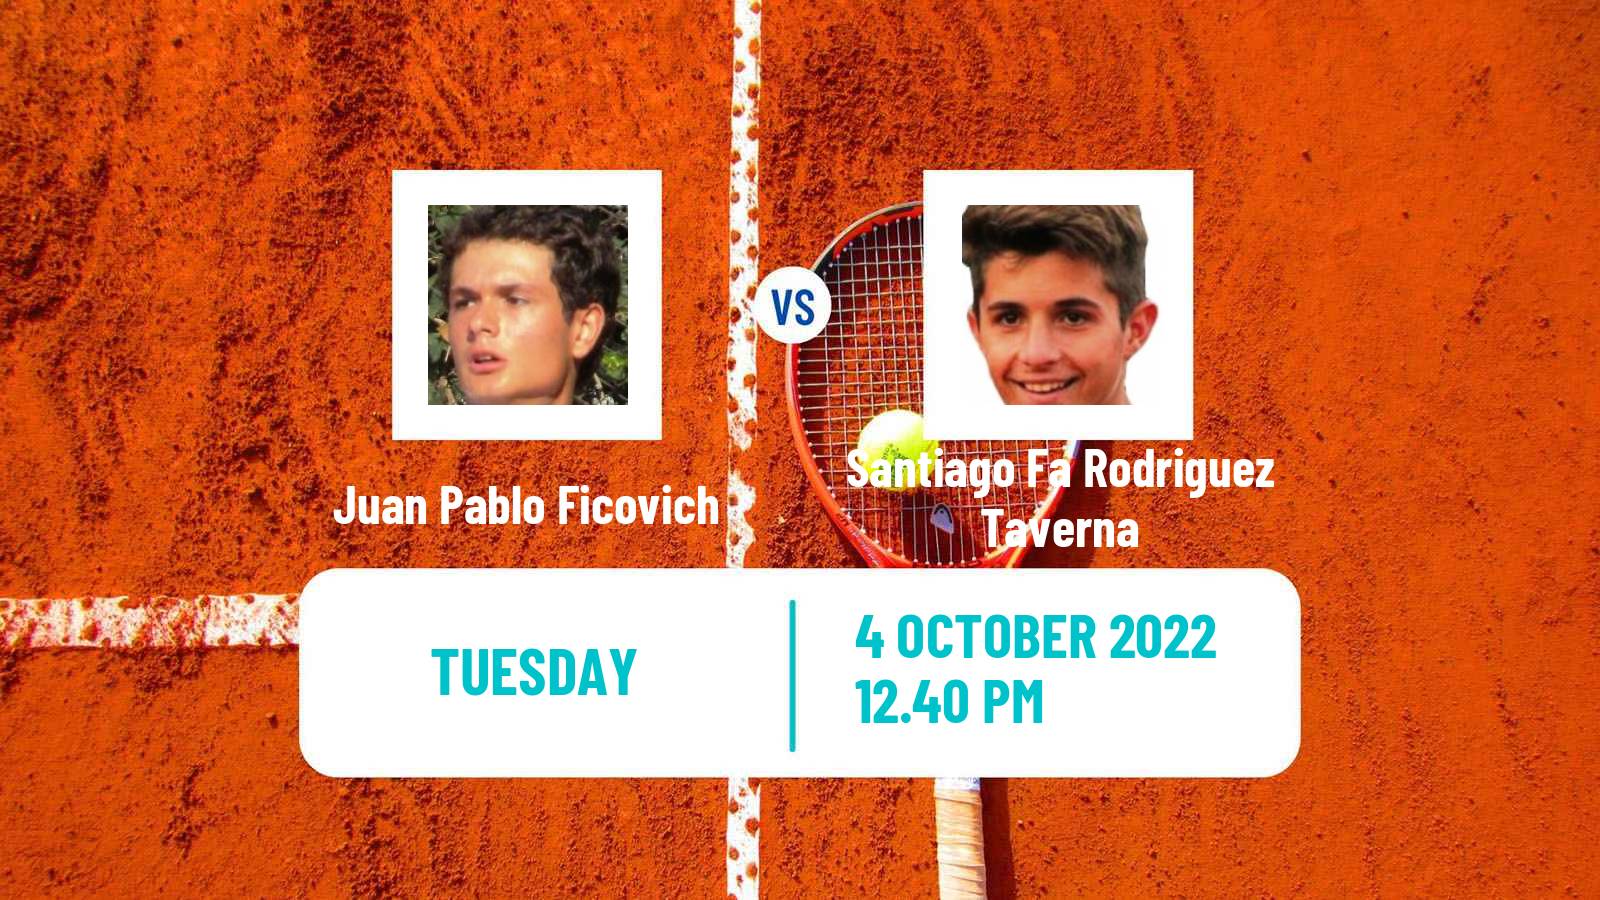 Tennis ATP Challenger Juan Pablo Ficovich - Santiago Fa Rodriguez Taverna